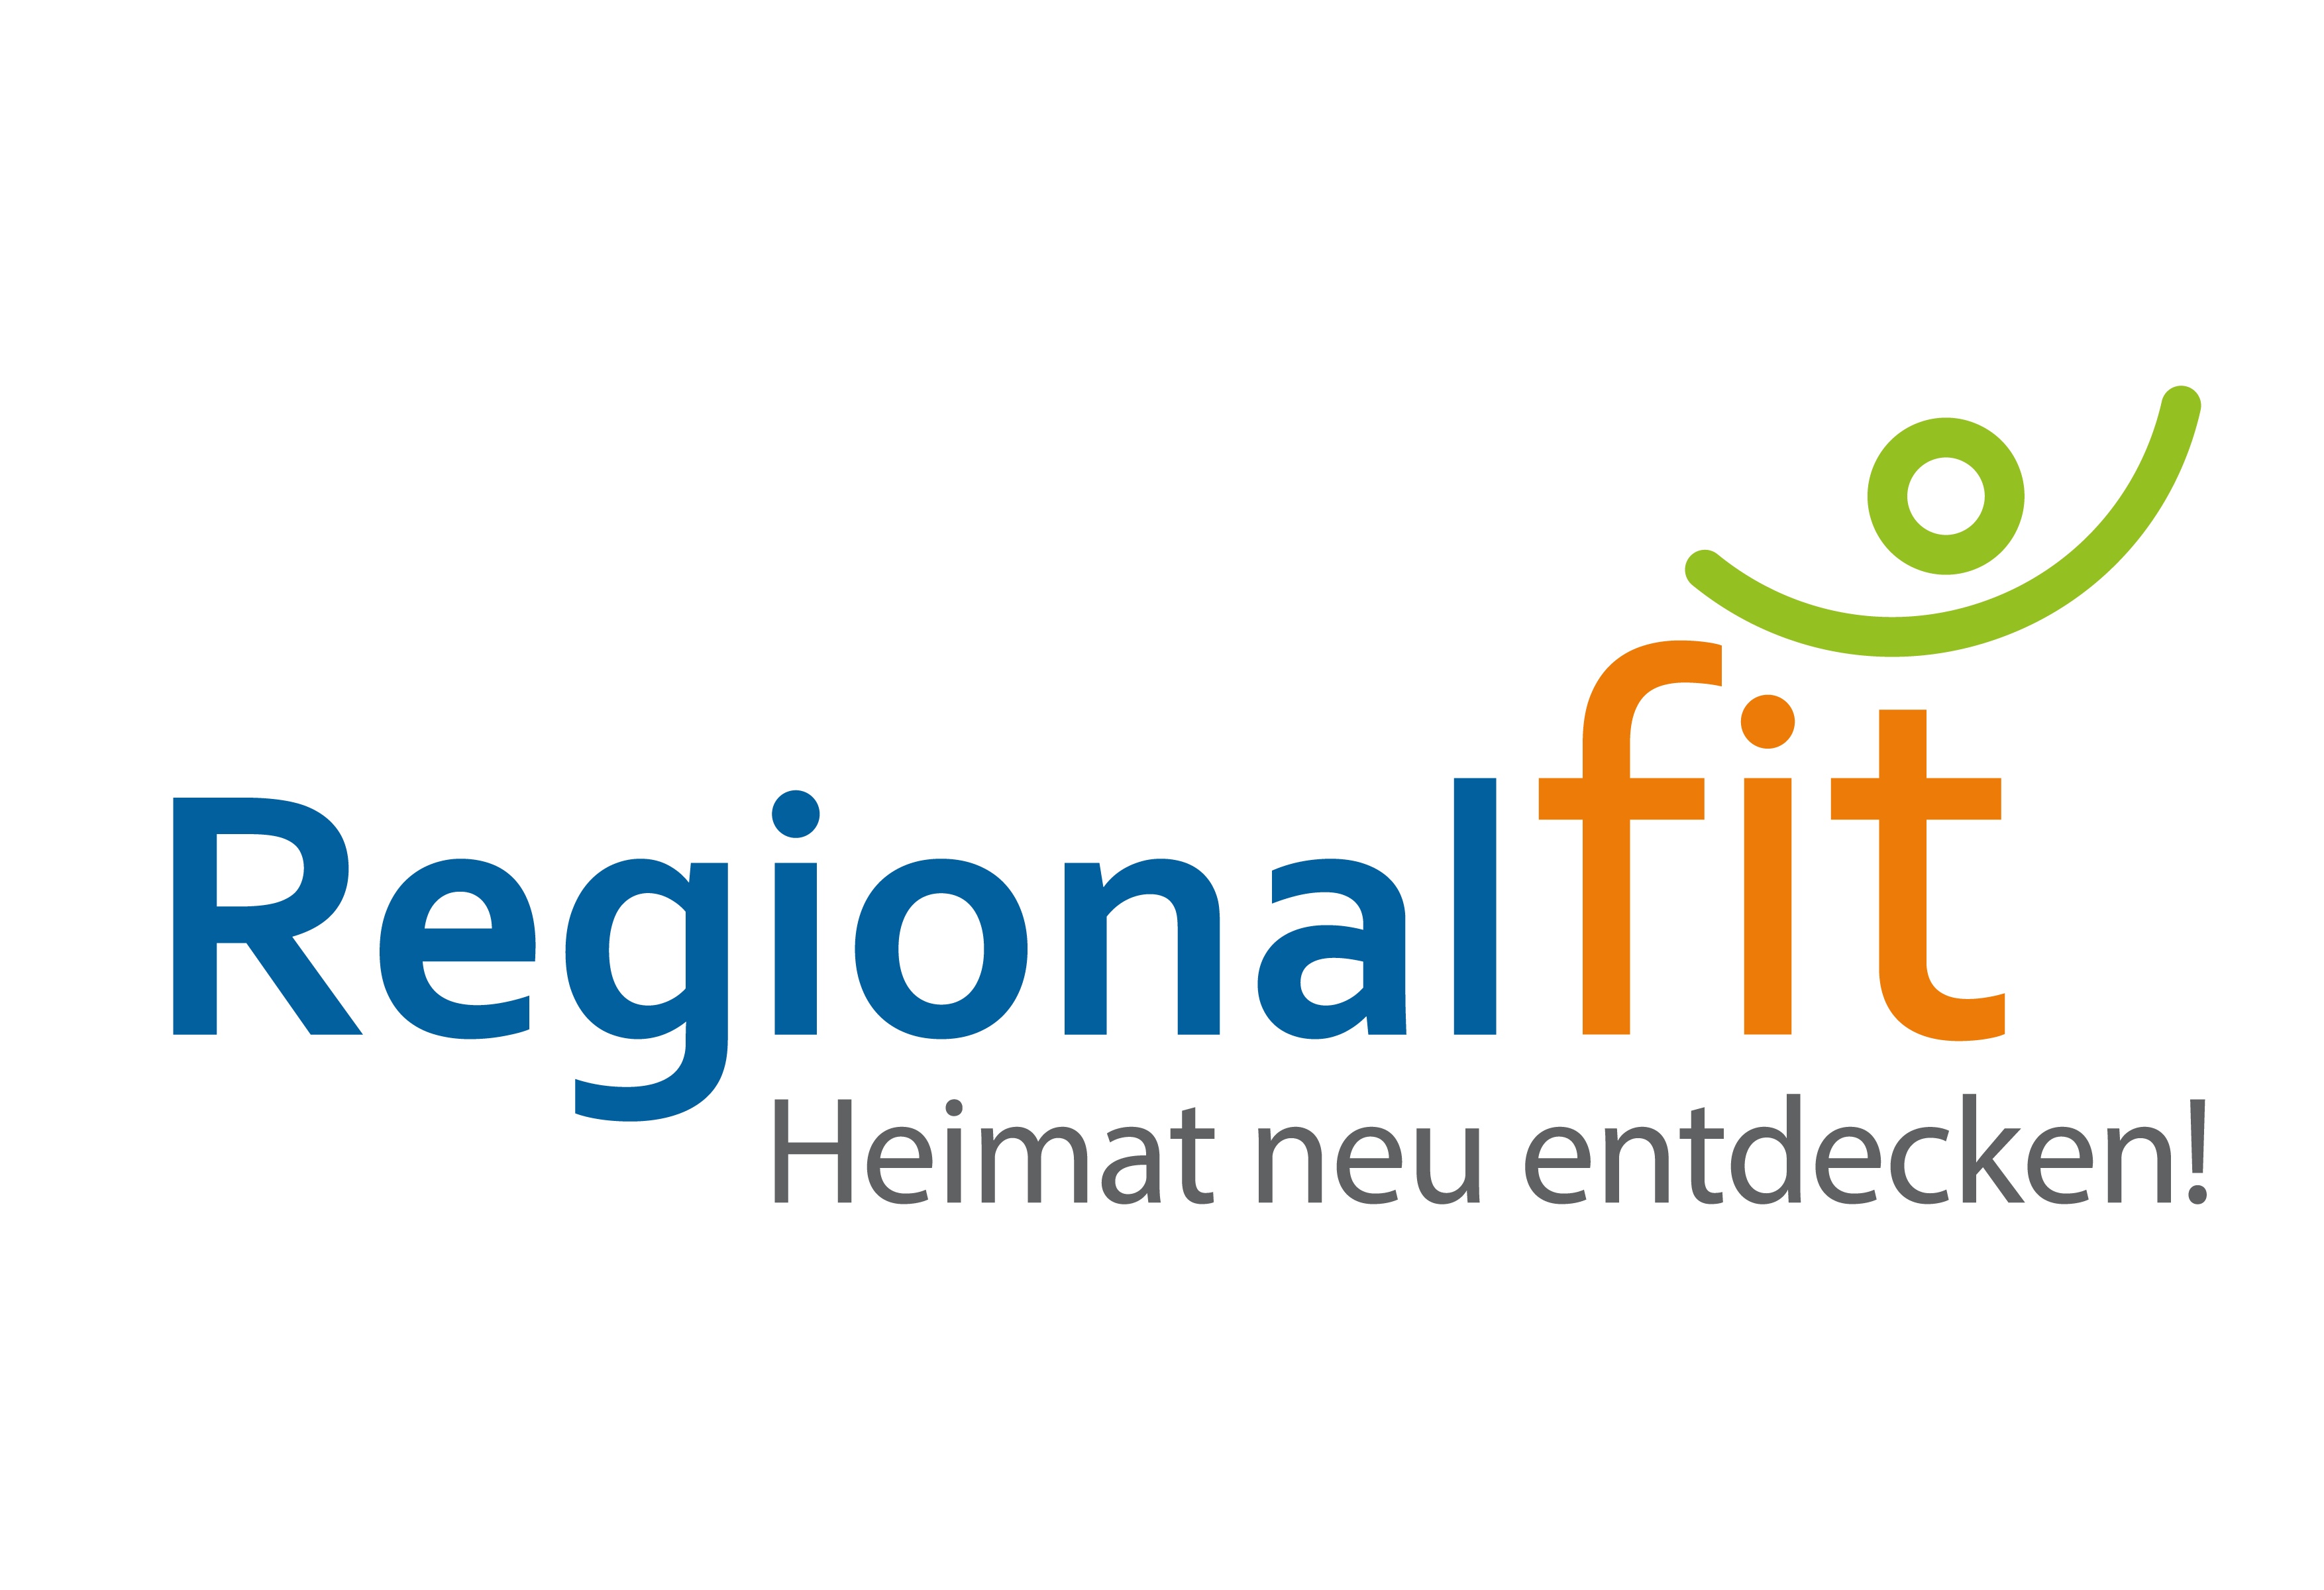 Regional Fit im Landkreis Regensburg